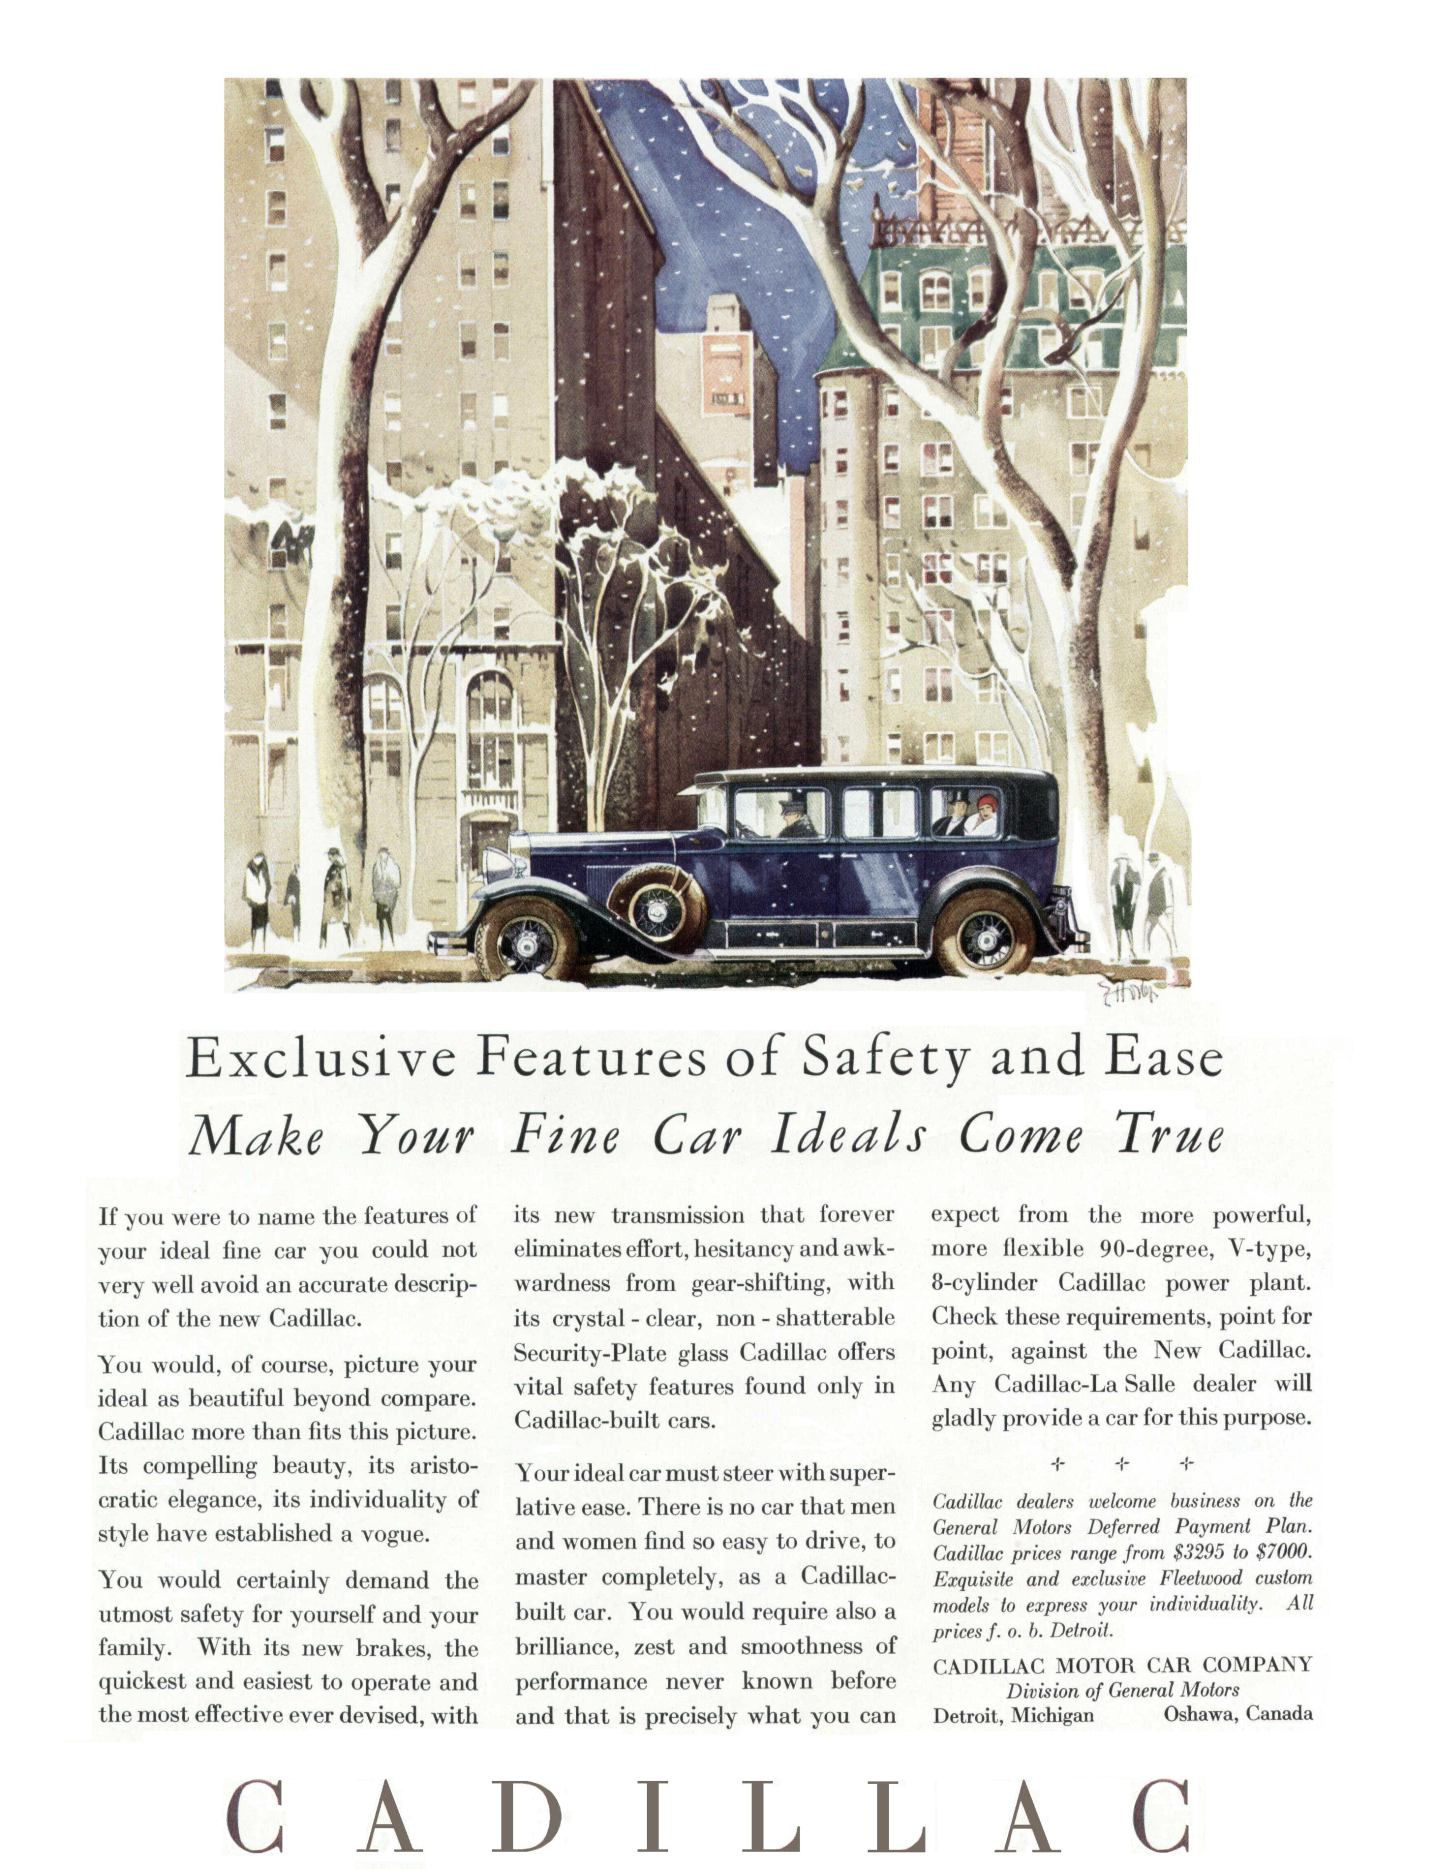 1929 Cadillac Auto Advertising